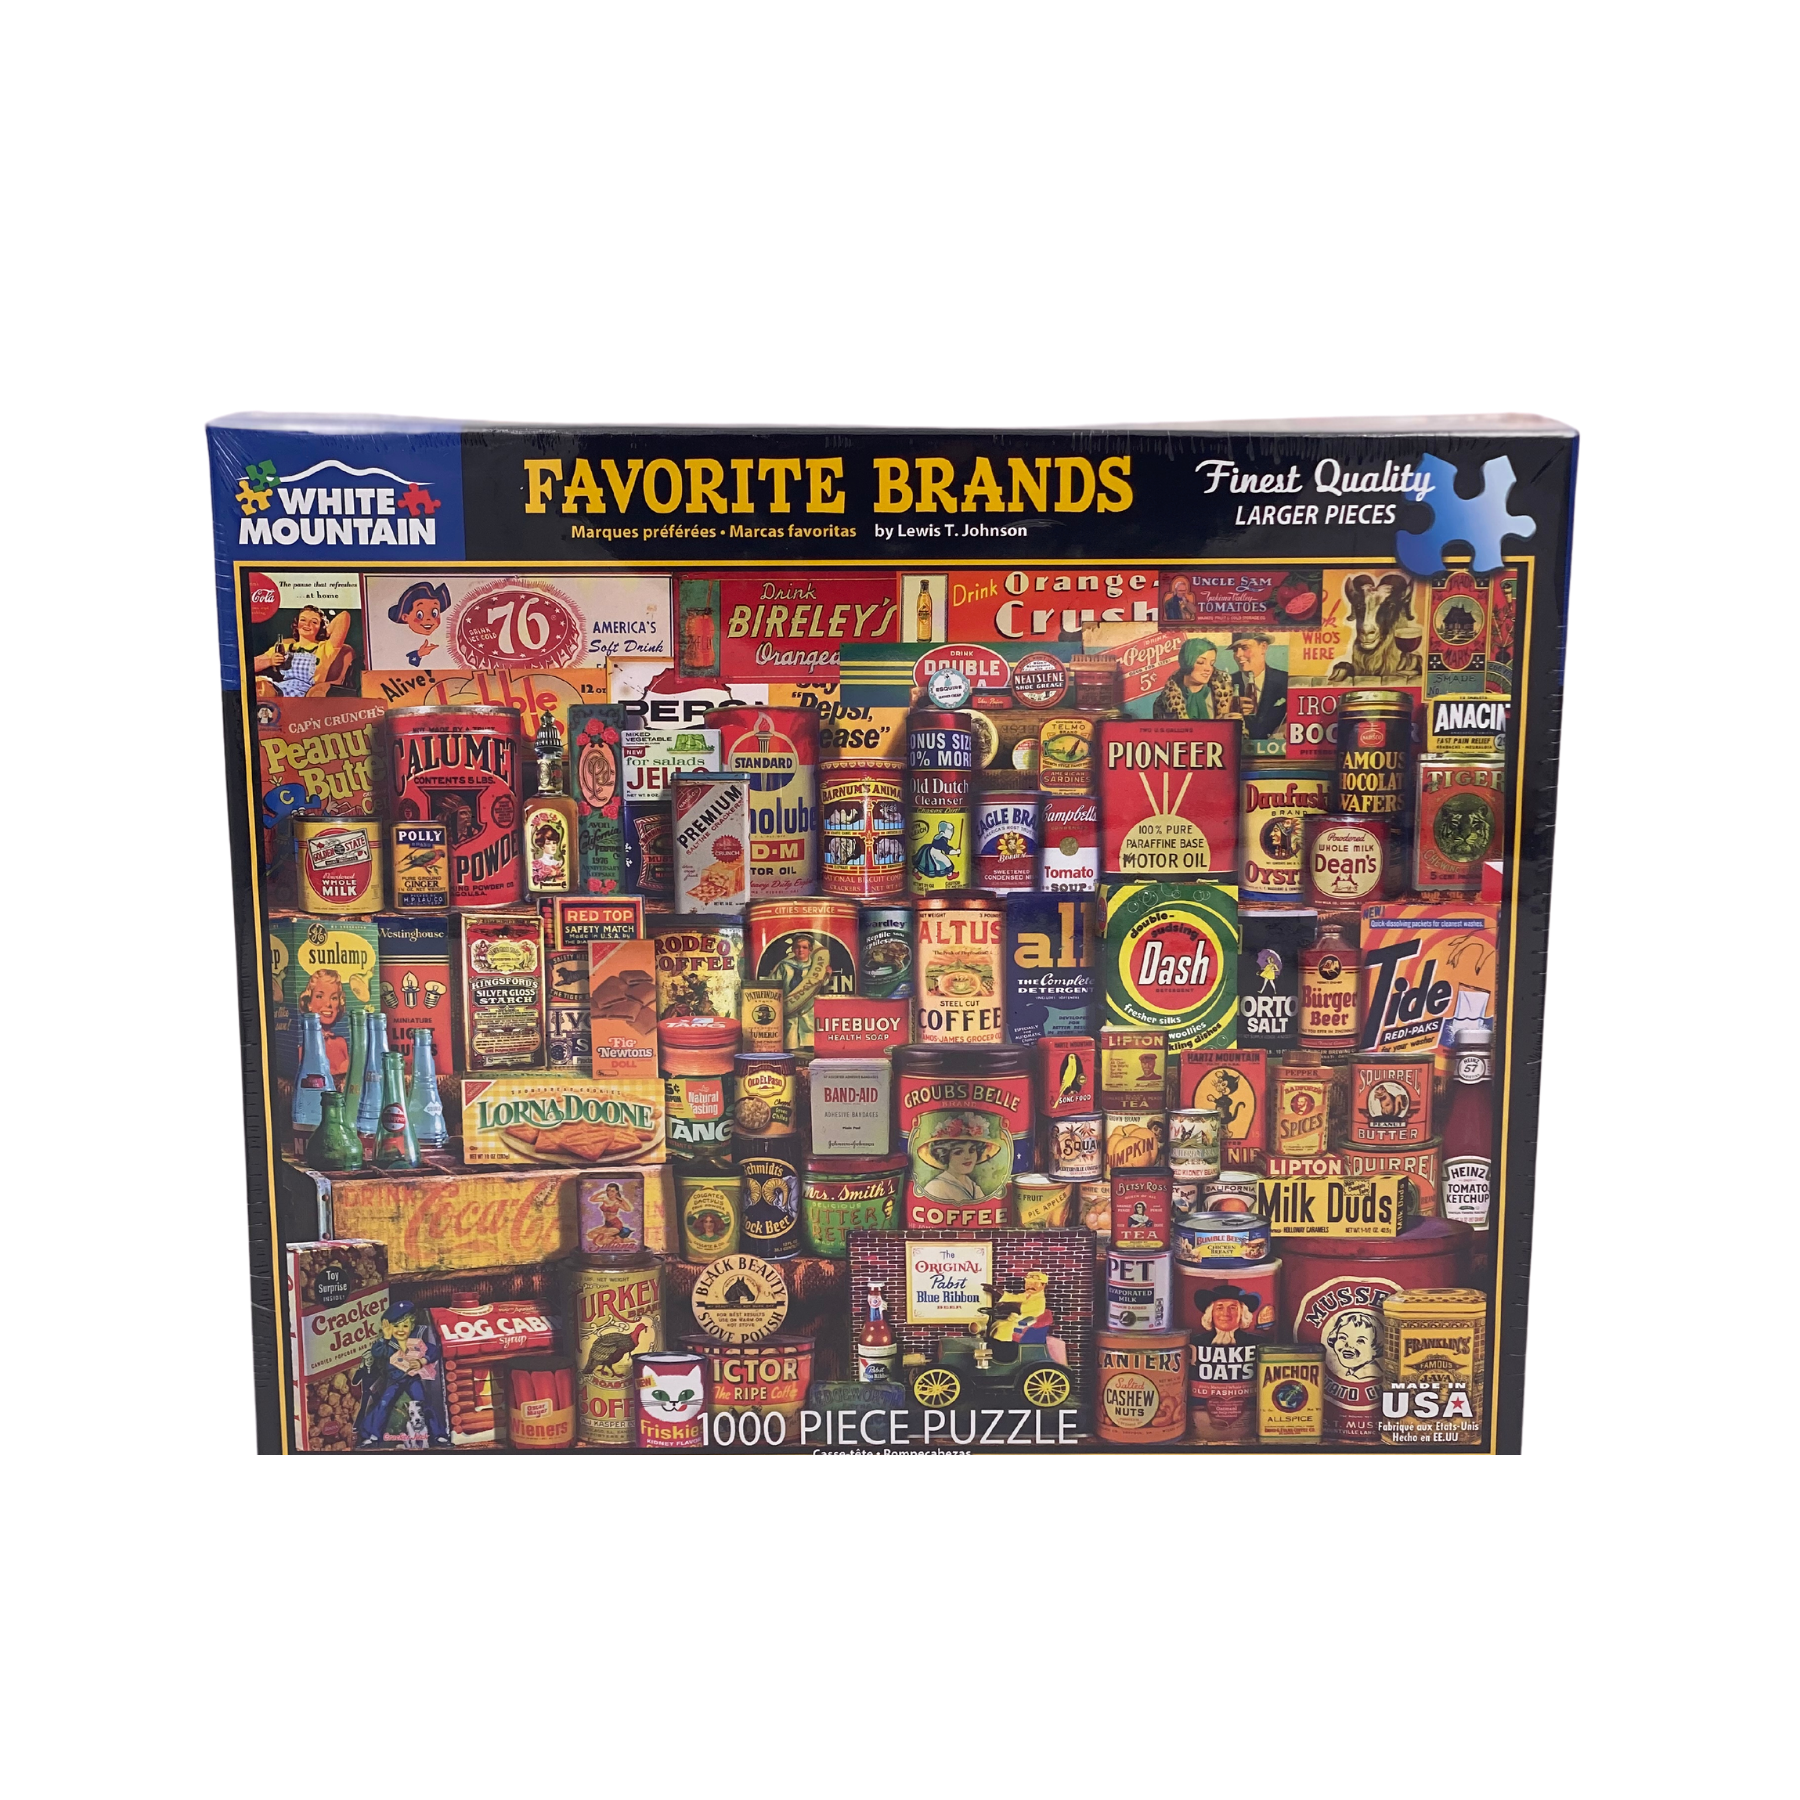 1000 Piece Puzzle-favorite brands